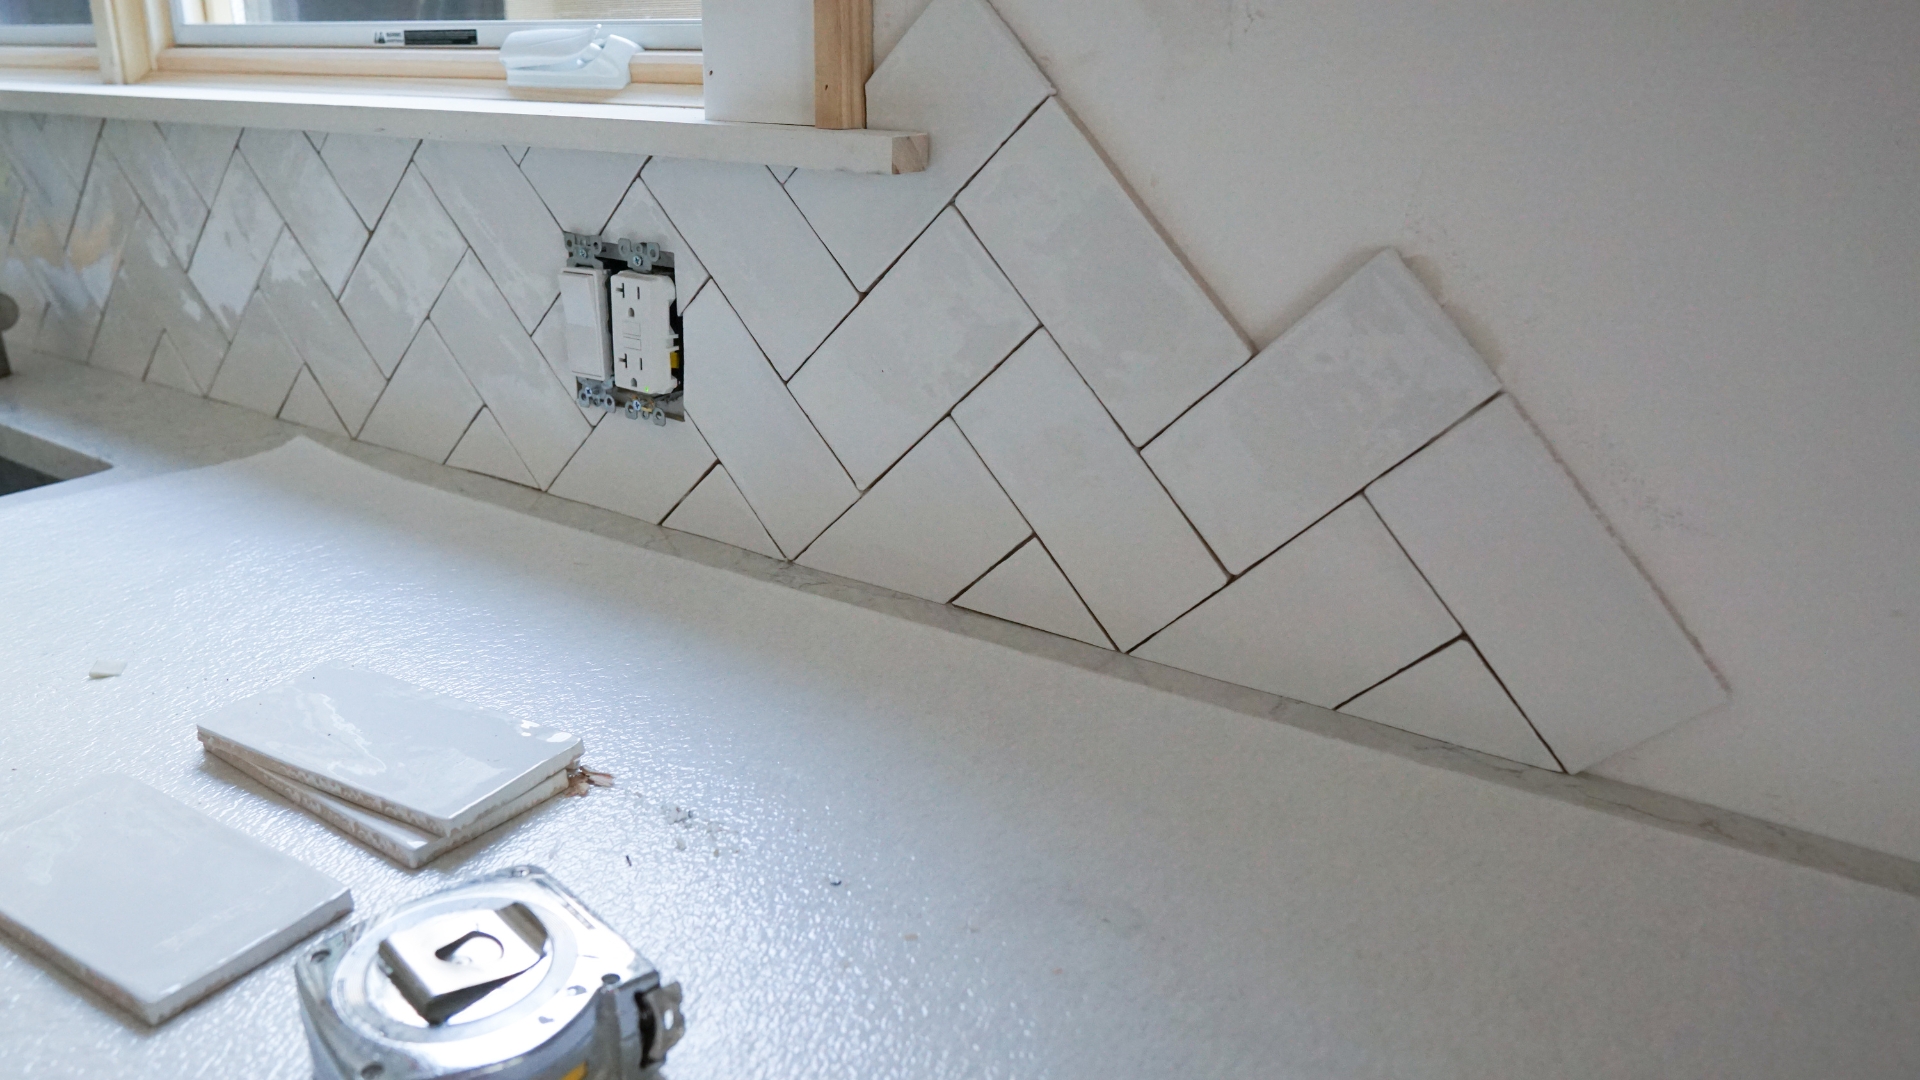 Chic herringbone tile kitchen backsplash for modern kitchen backsplash ideas and a modern twist on a classic look